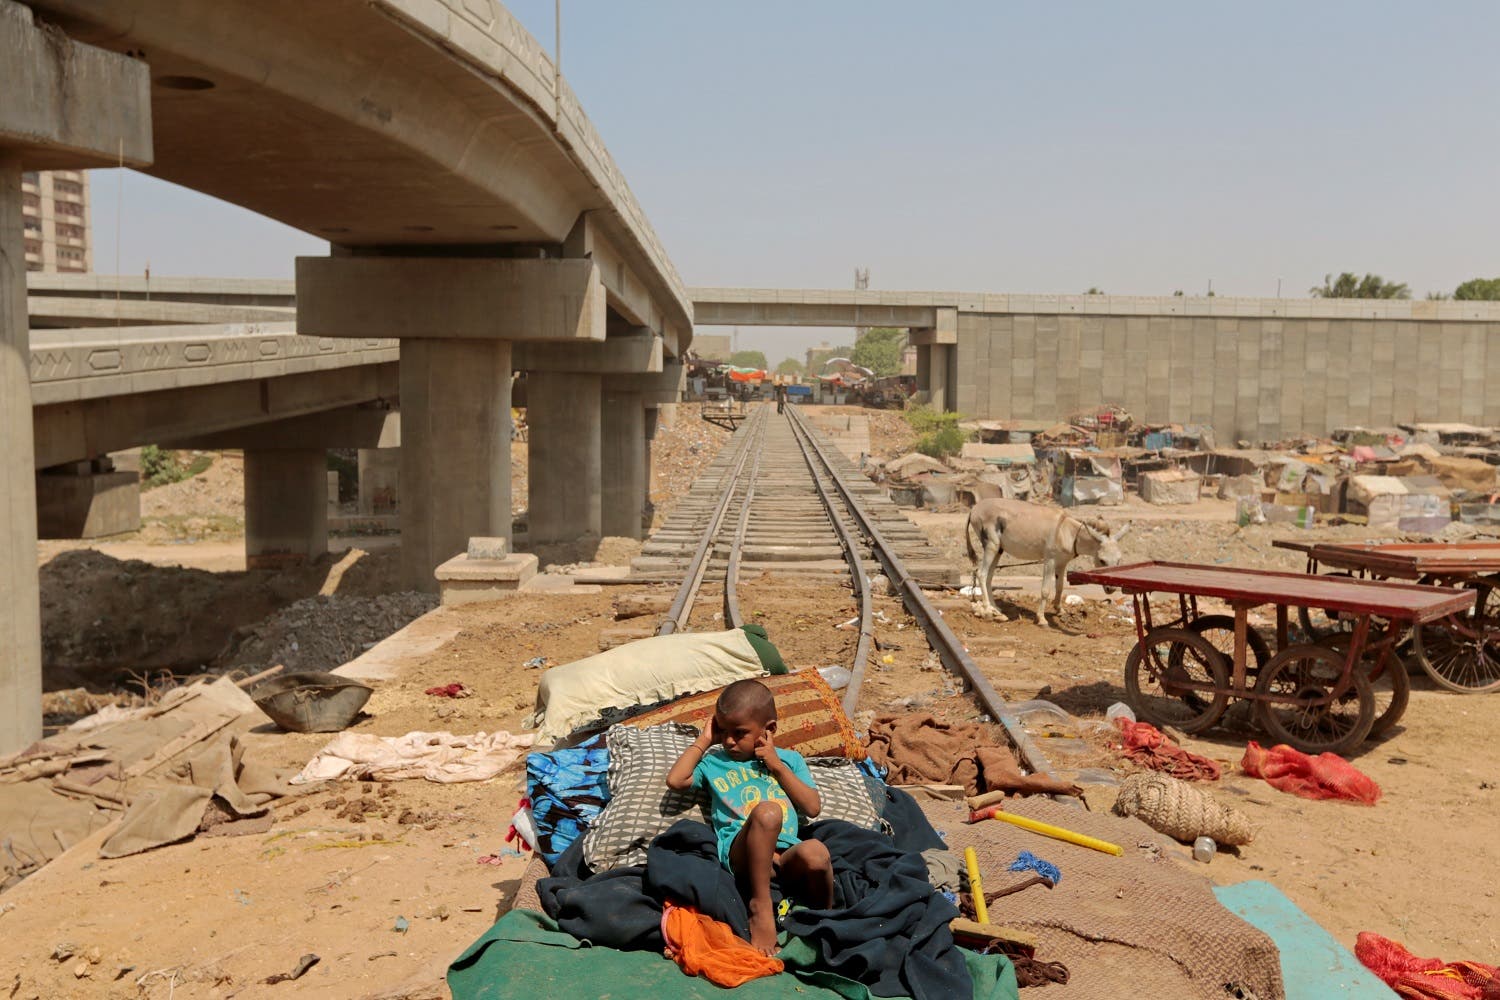 Karachi rail revival faces shanty town delay